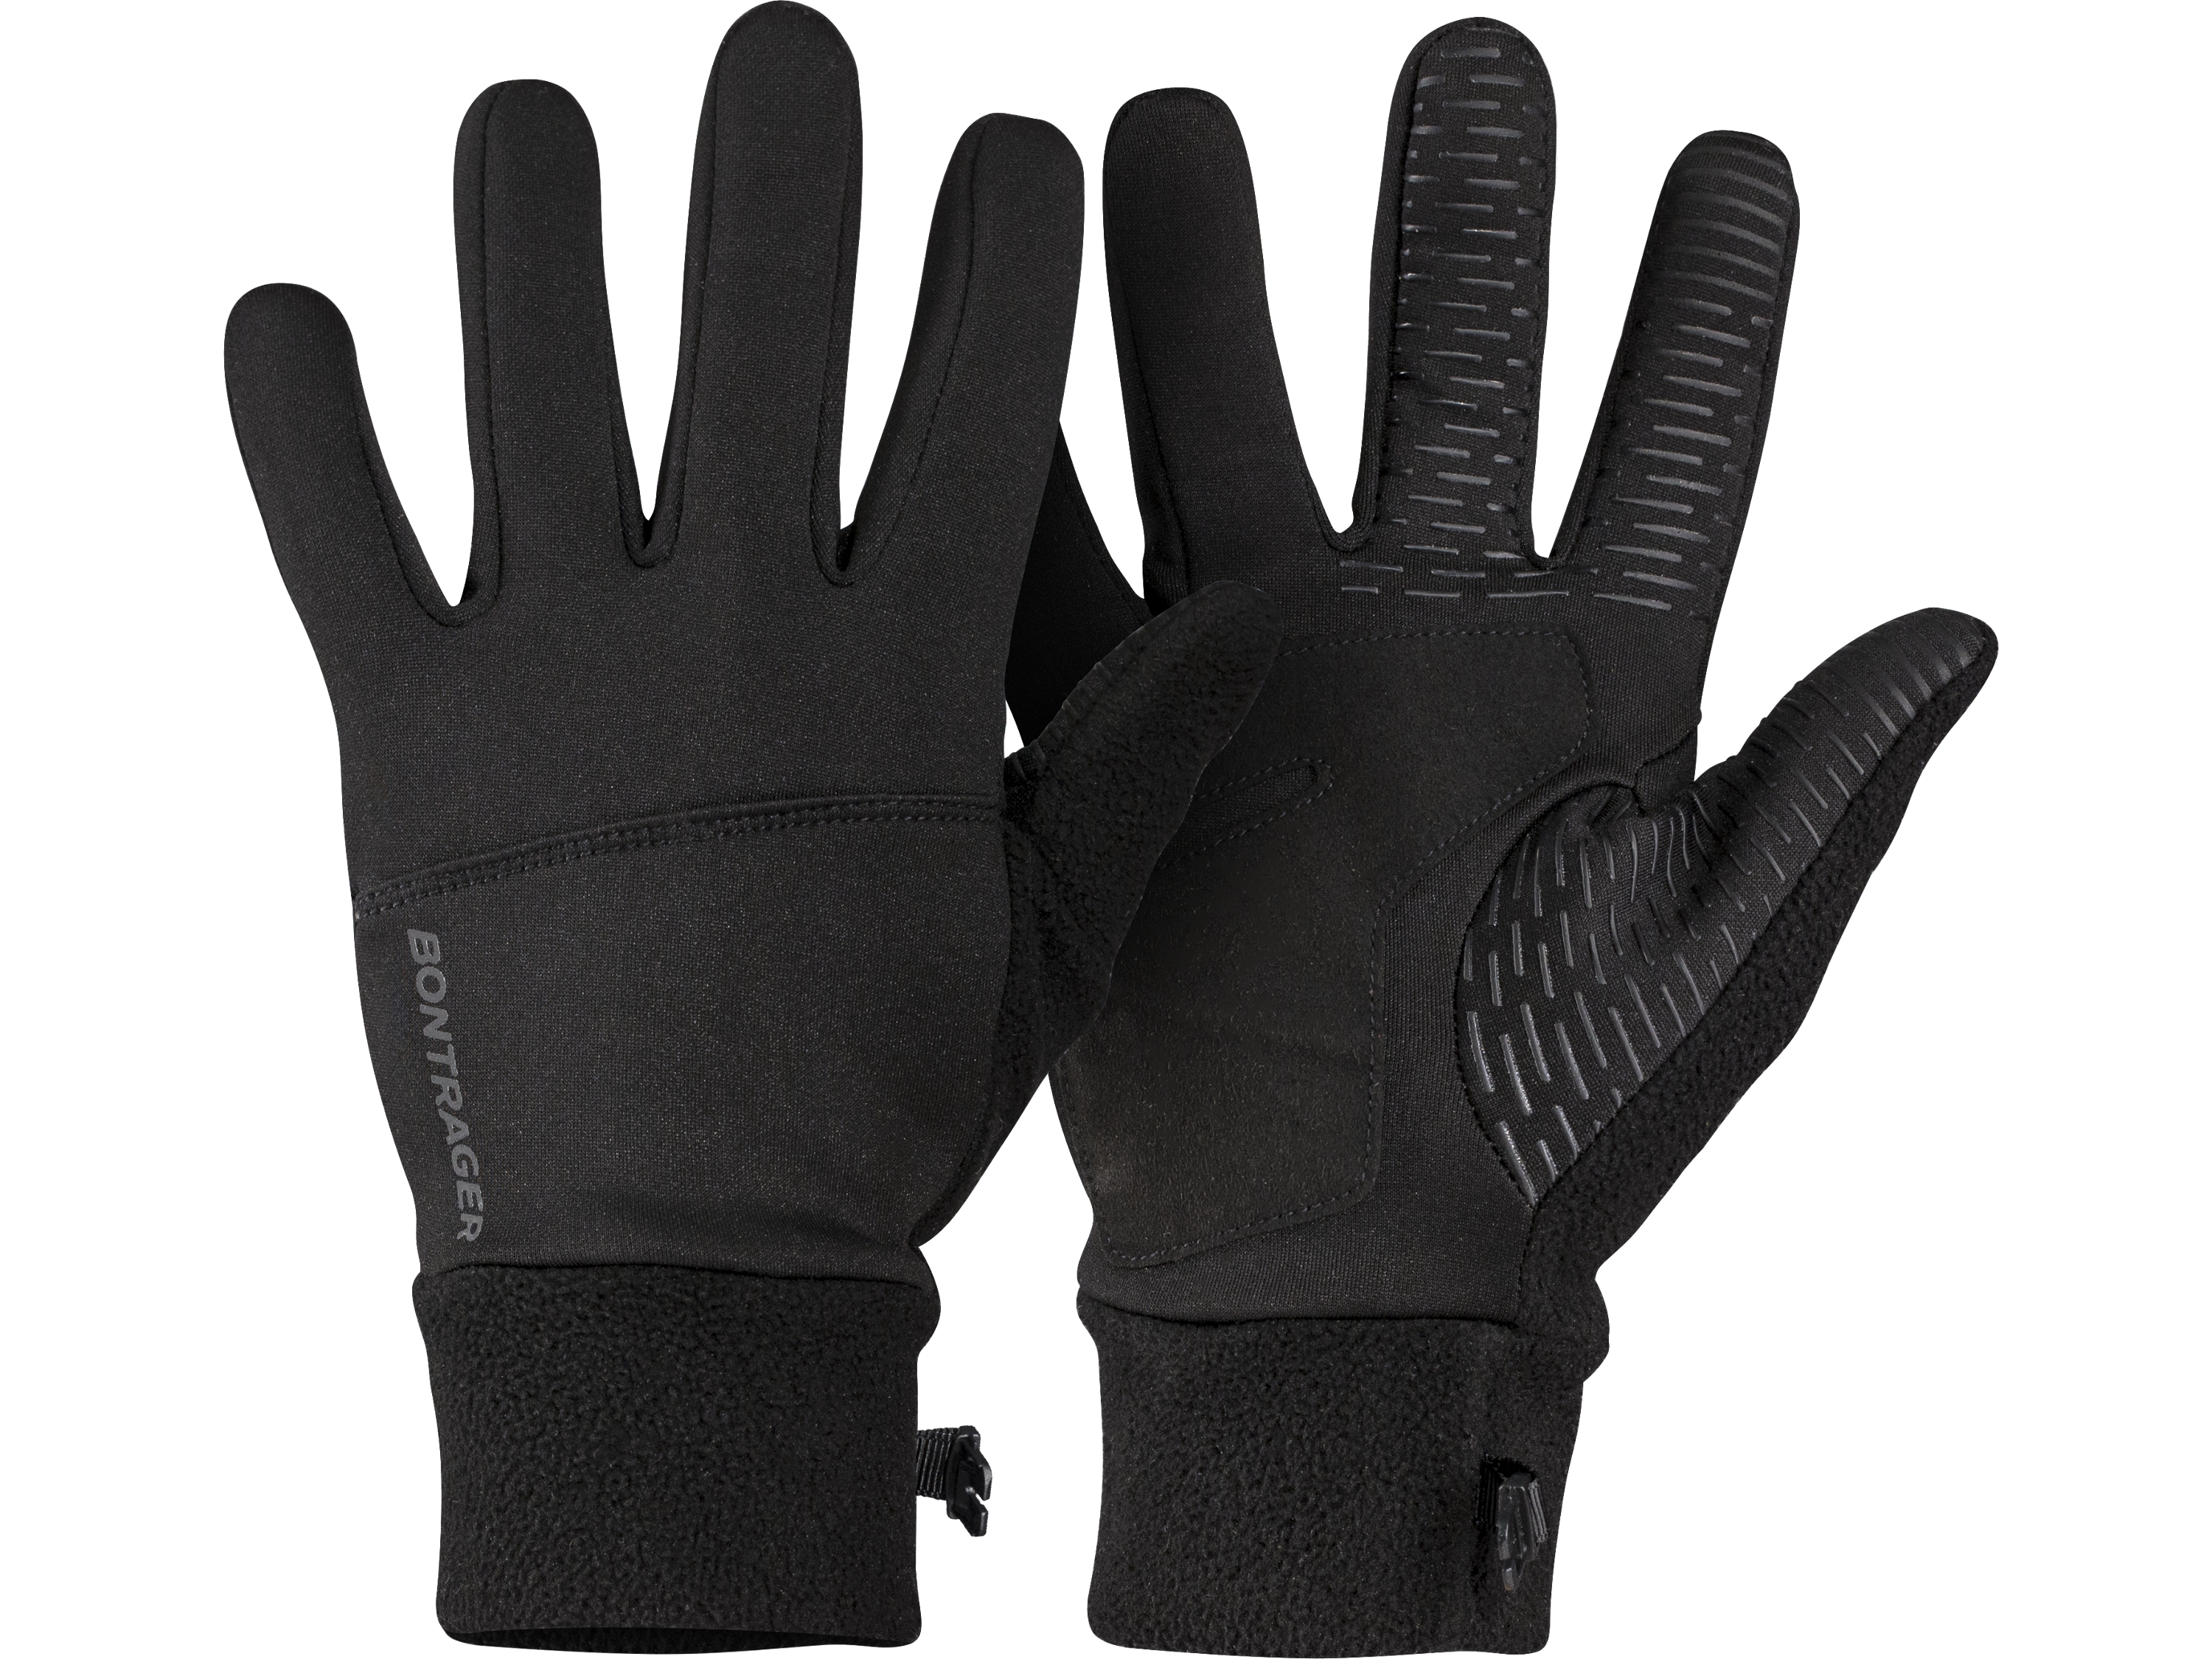 thermal cycling gloves mens